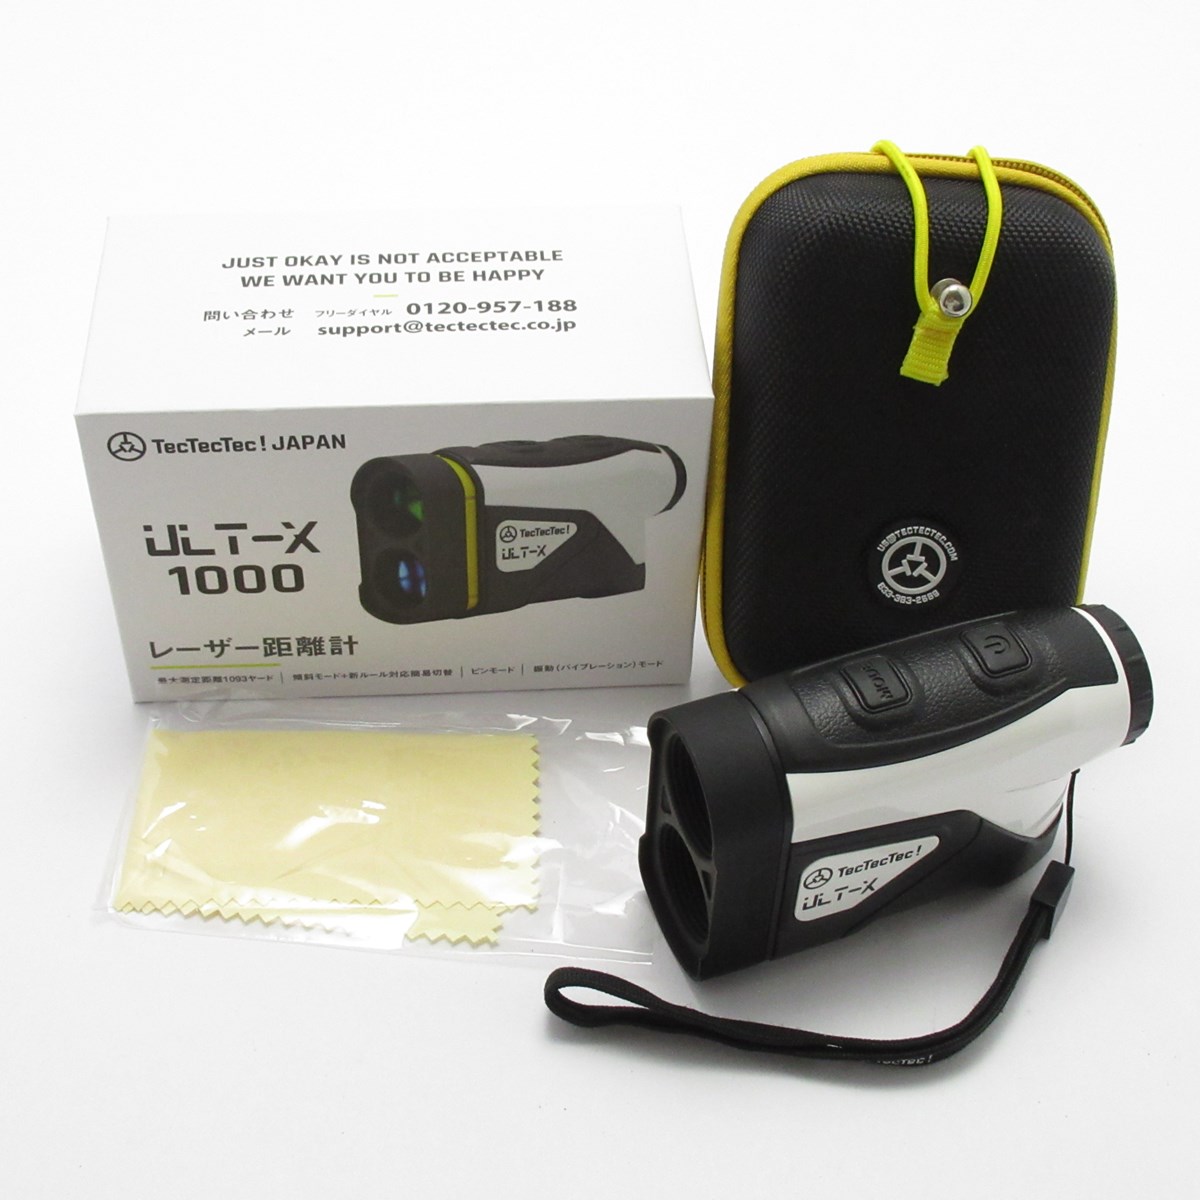 tectectec ゴルフ レーザー距離計測機 ULTX1000 - ラウンド用品 ...